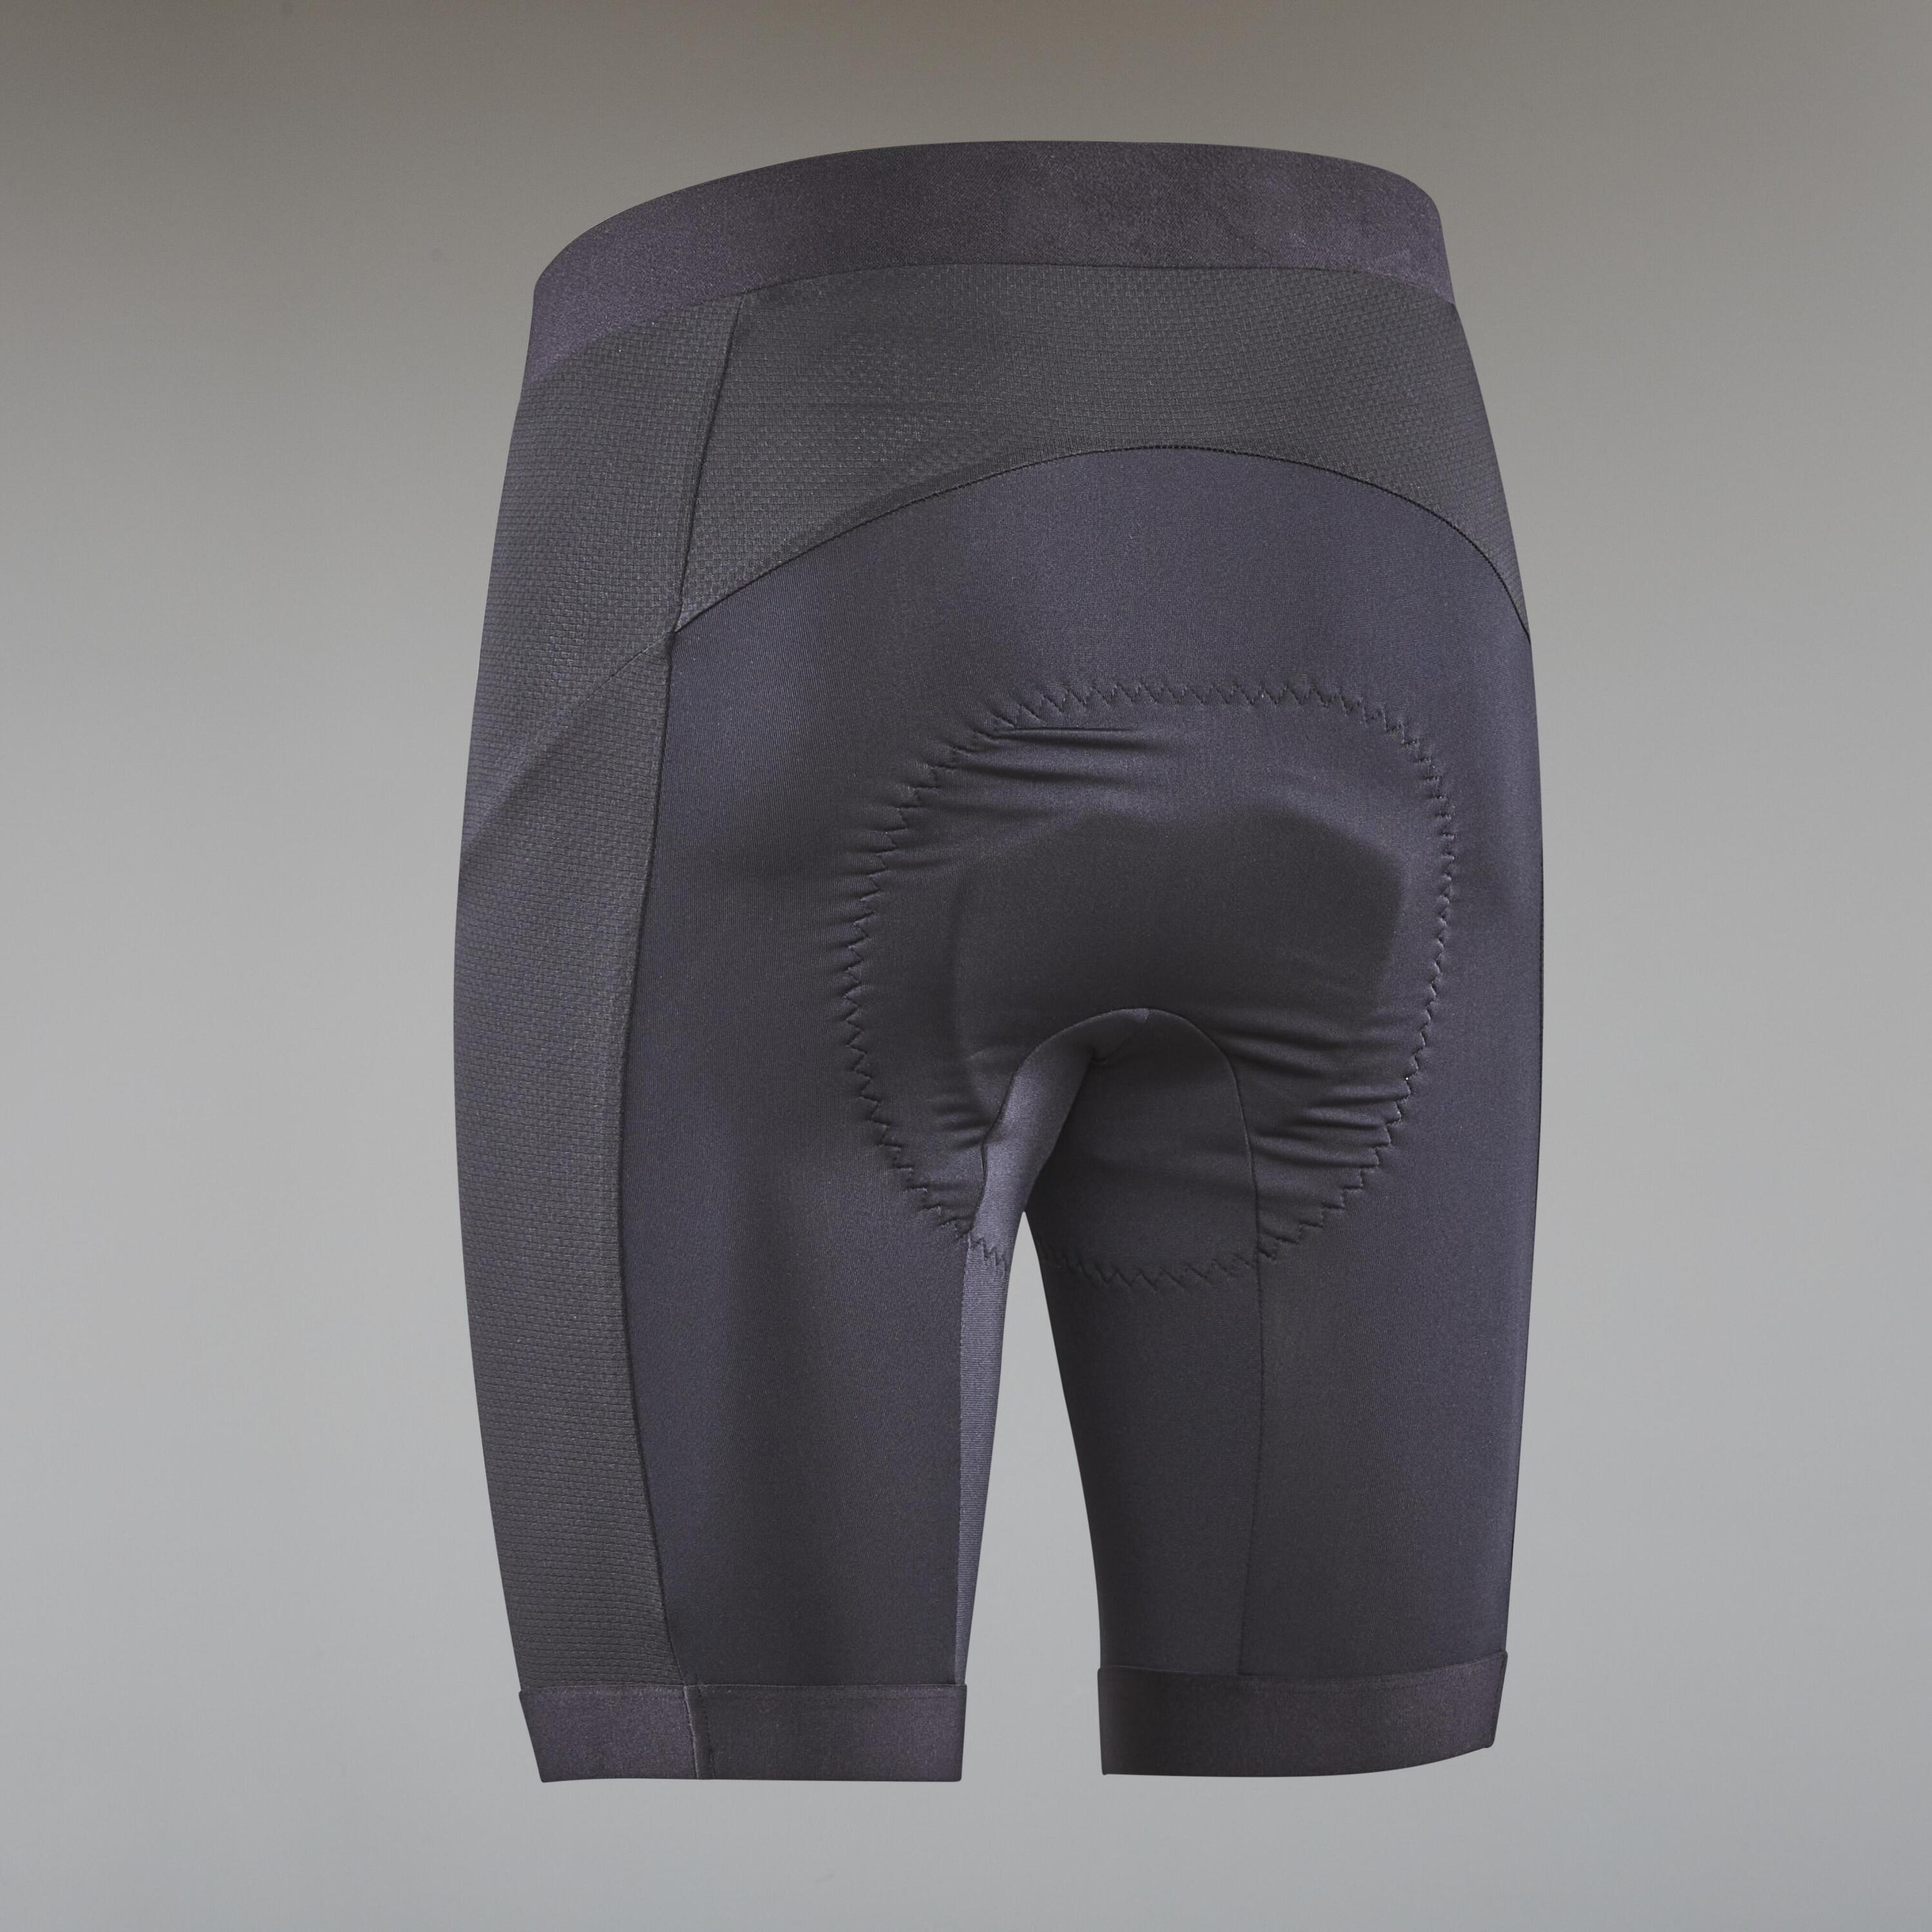 Men's 2-in-1 Mountain Bike Combo Shorts/Undershorts Expl 500 - Black  ROCKRIDER